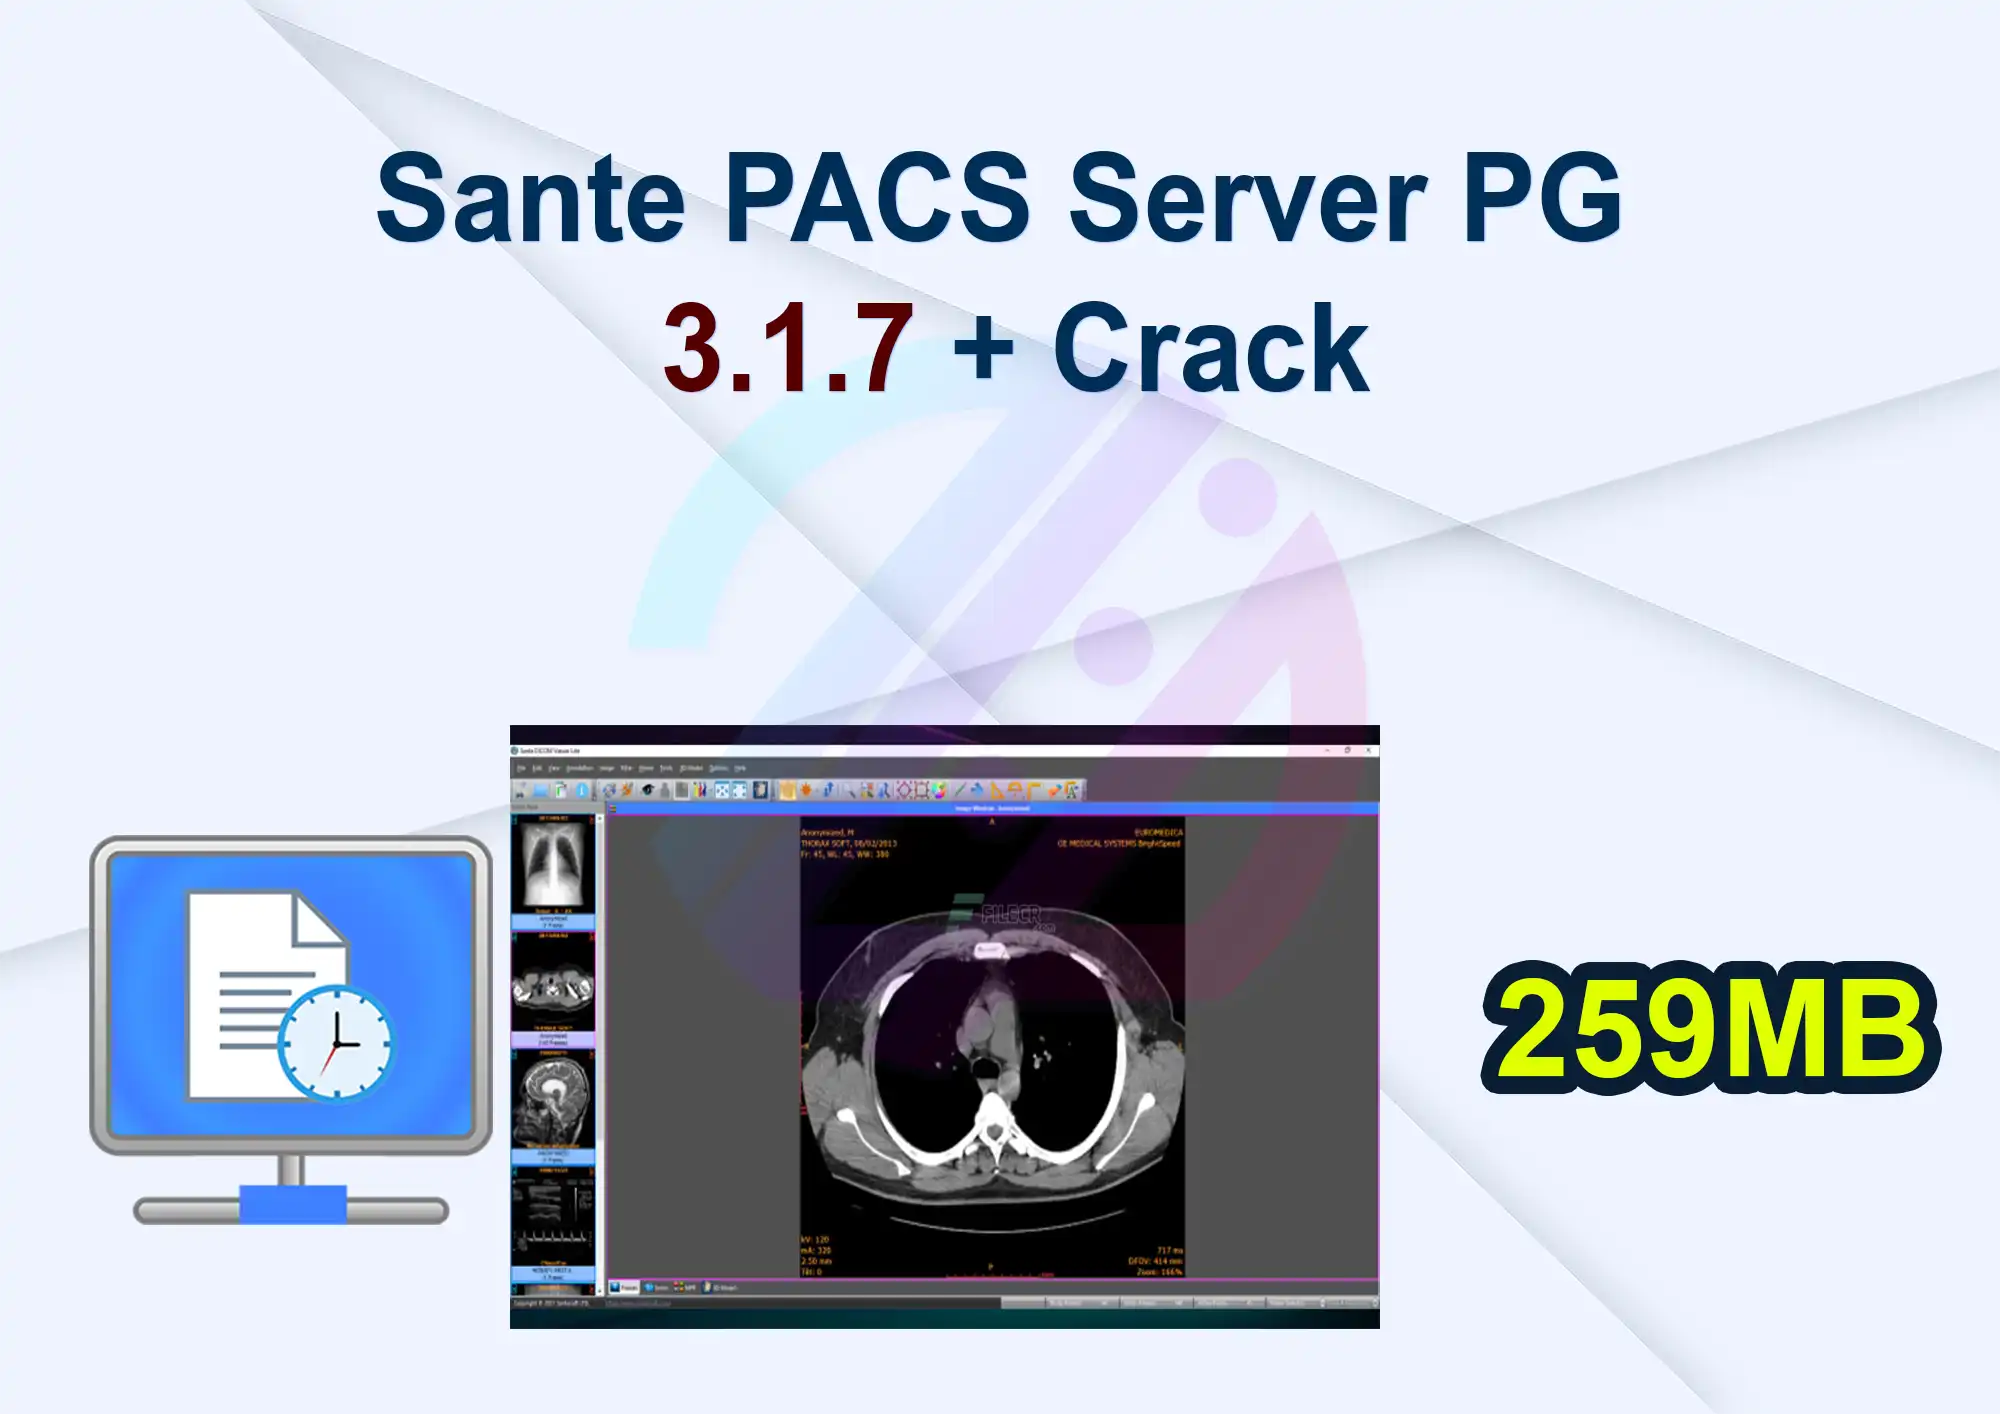 Sante PACS Server PG 3.1.7 + Crack